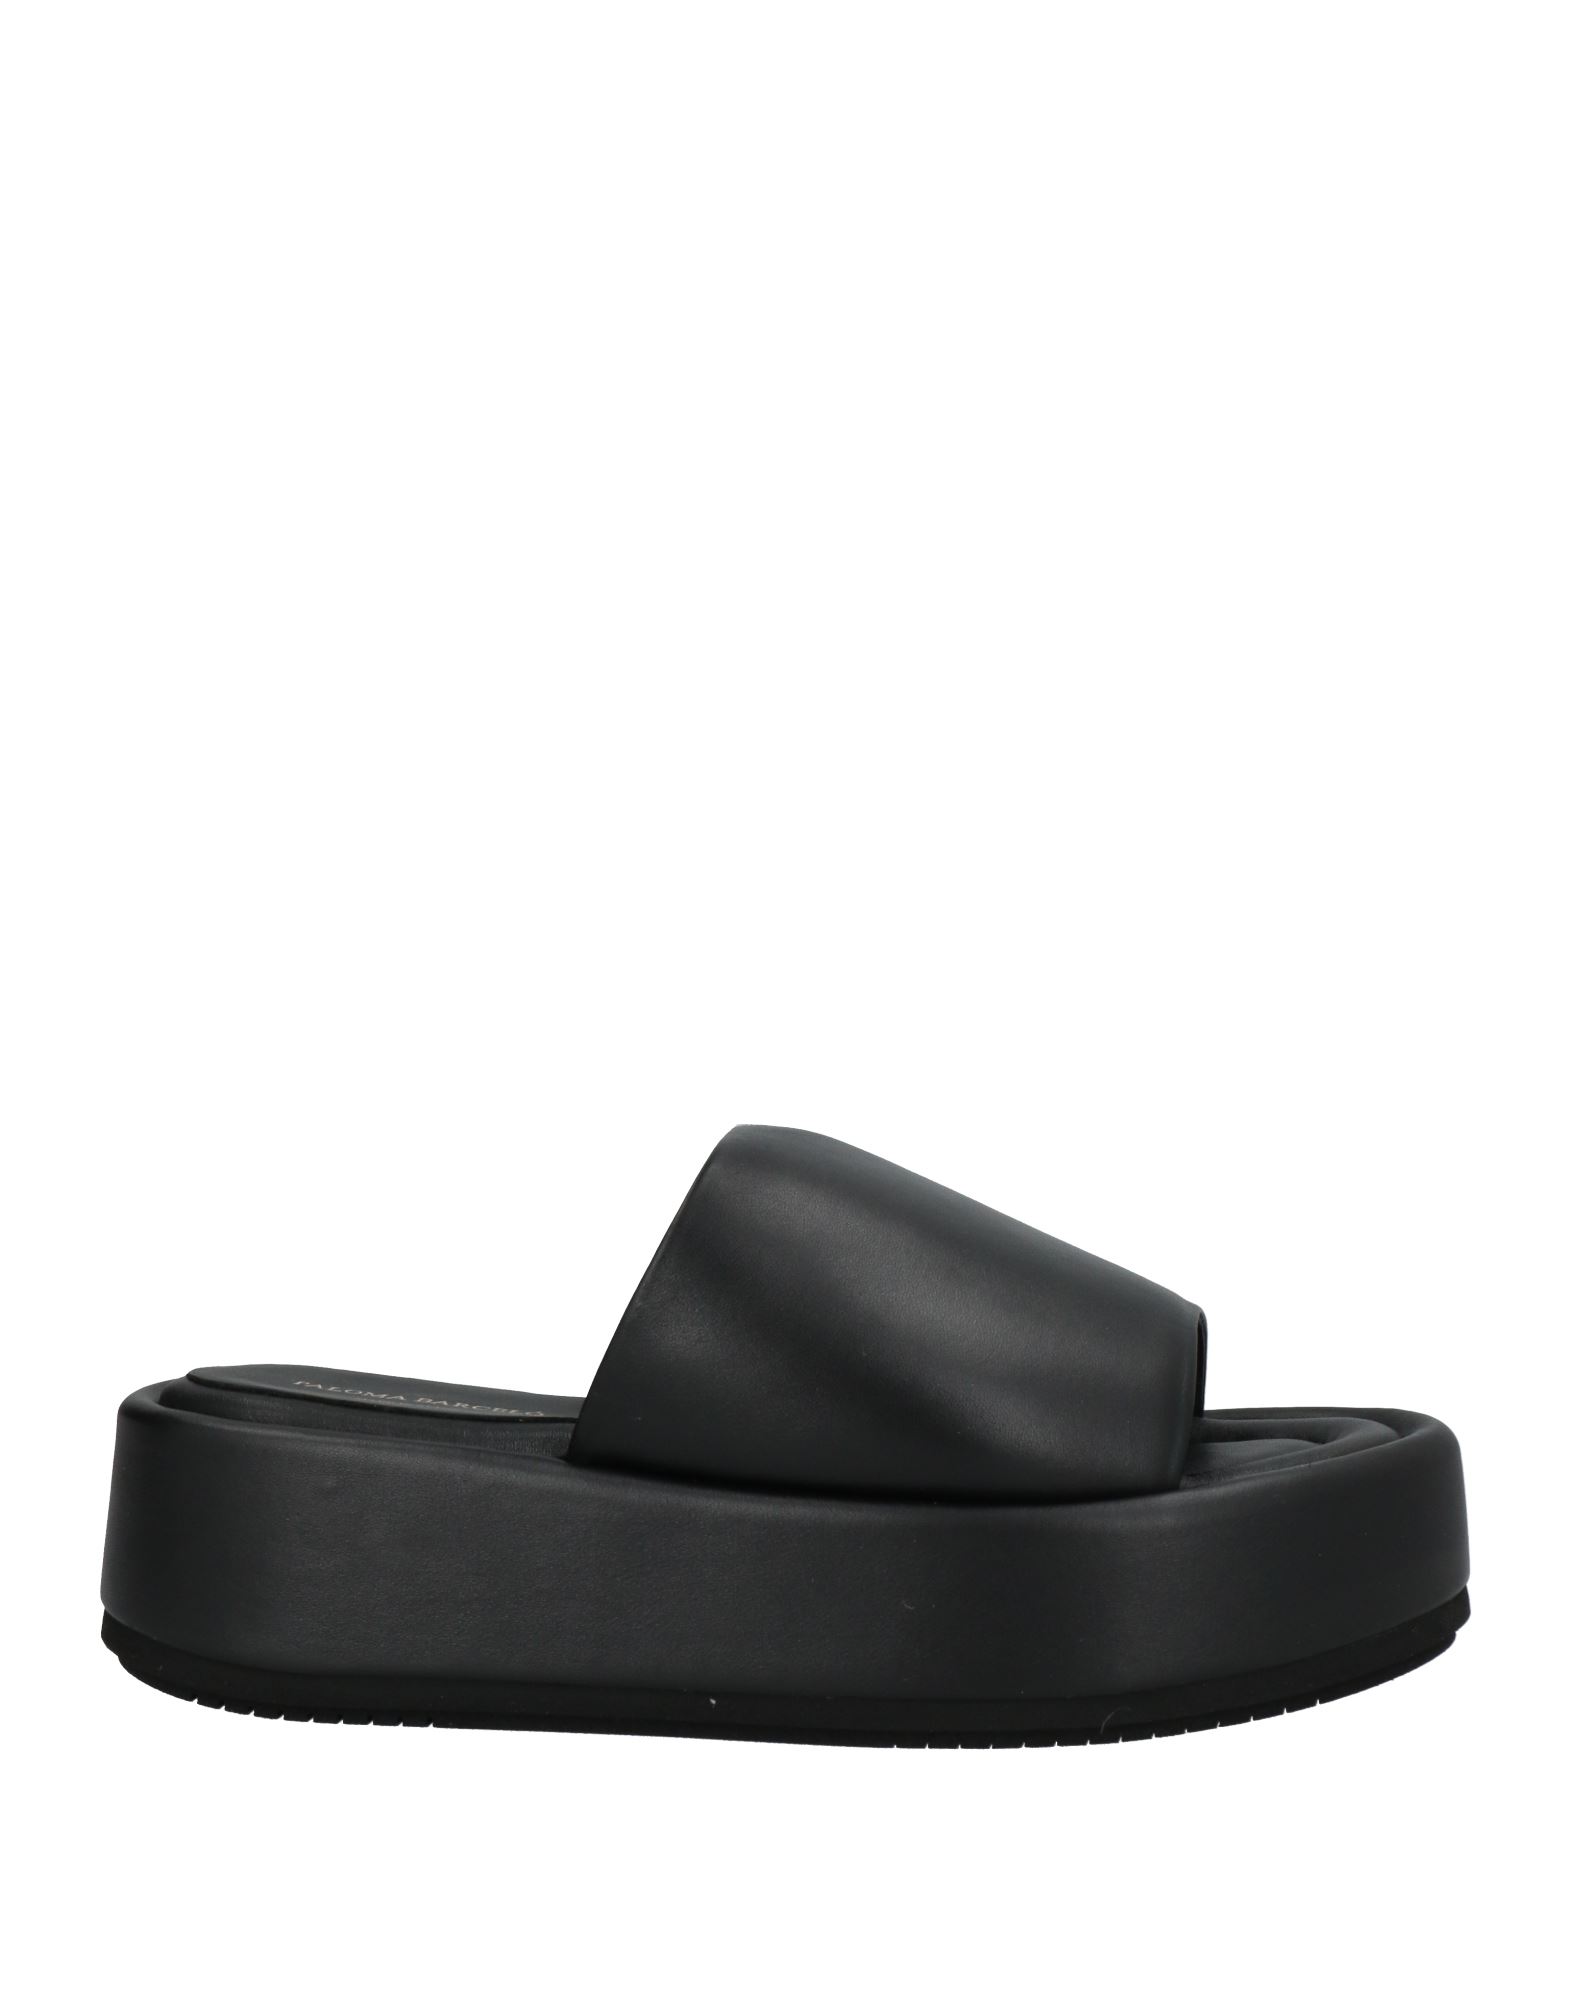 Paloma Barceló Sandals In Black